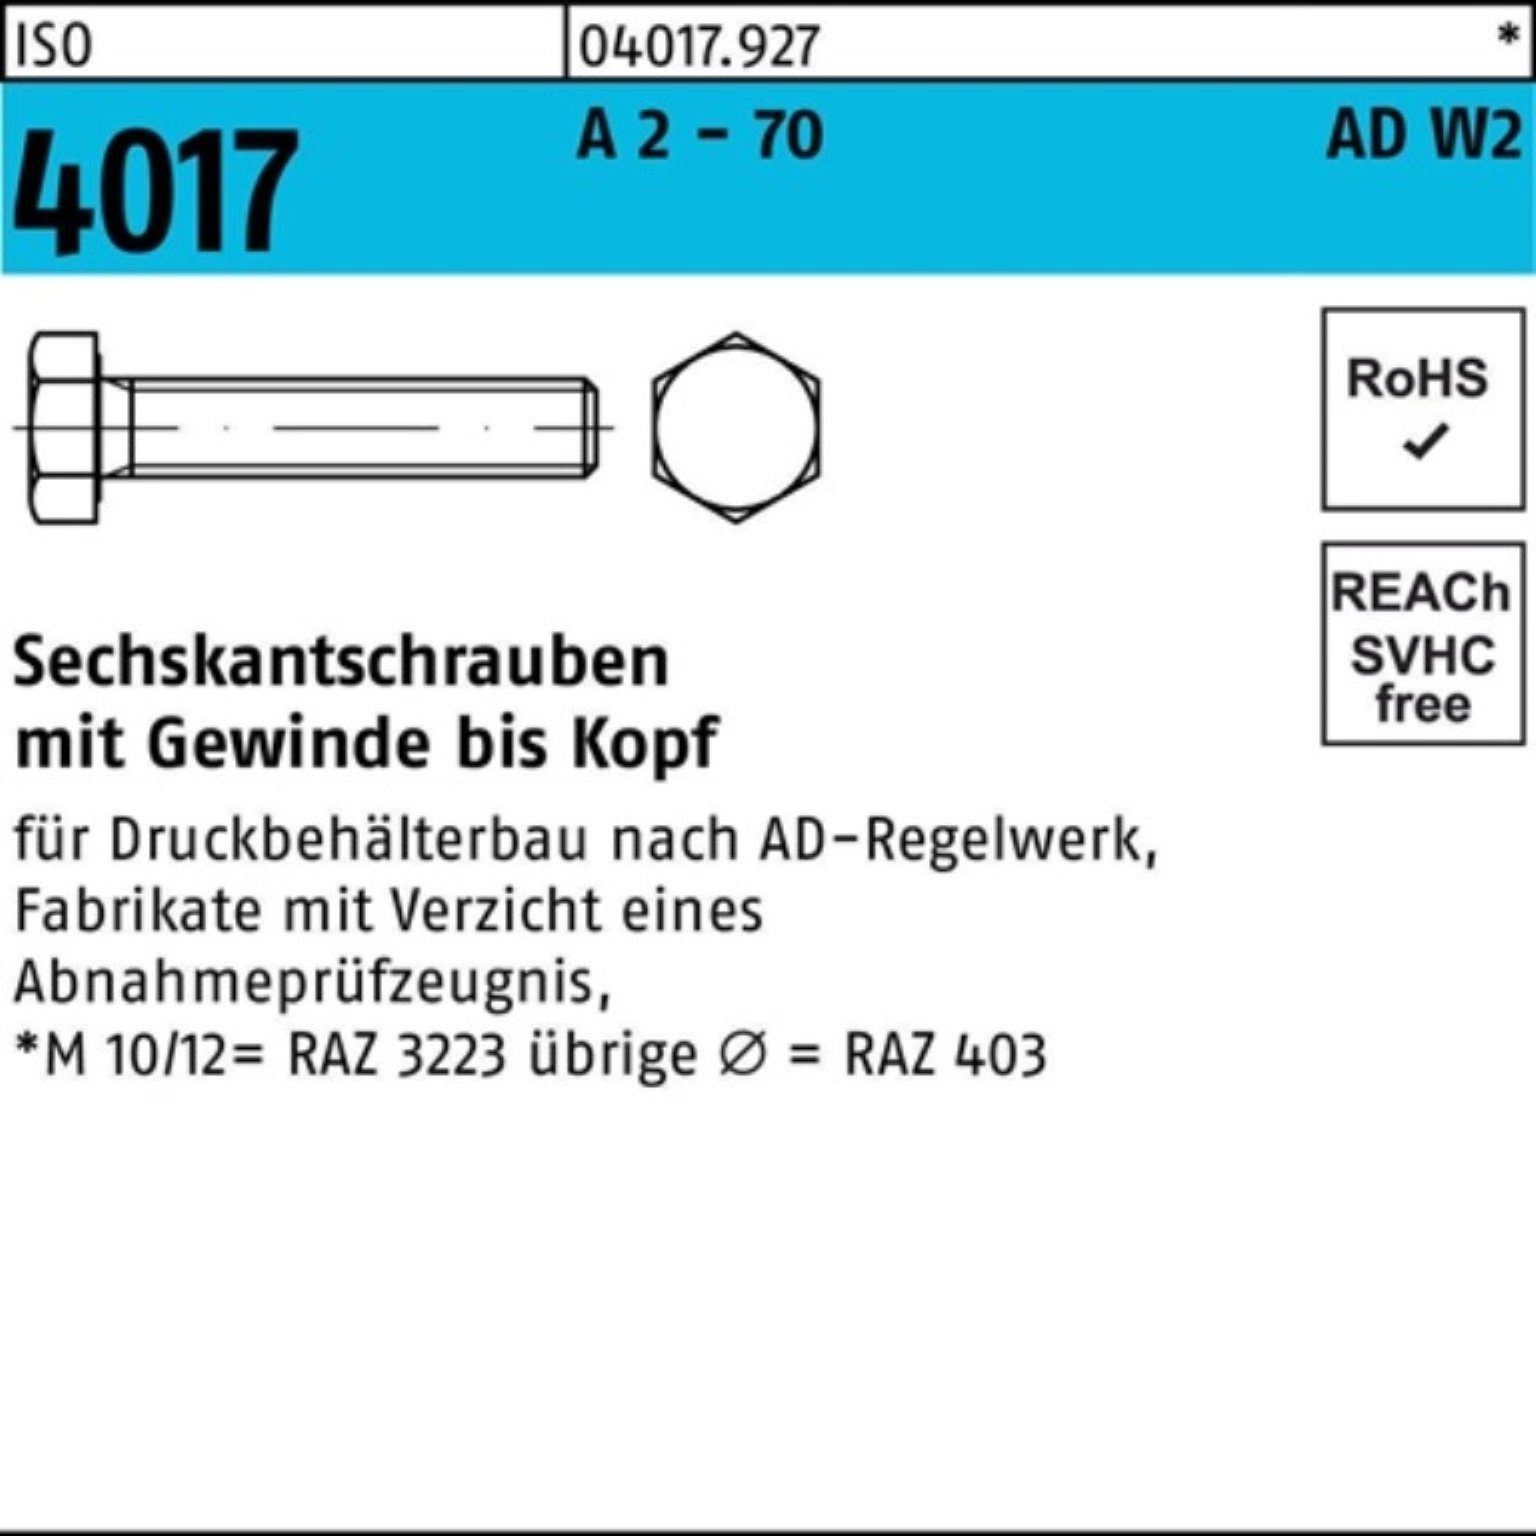 Bufab Sechskantschraube 100er Pack Sechskantschraube ISO 4017 VG M12x 75 A 2 - 70 AD-W2 25 St